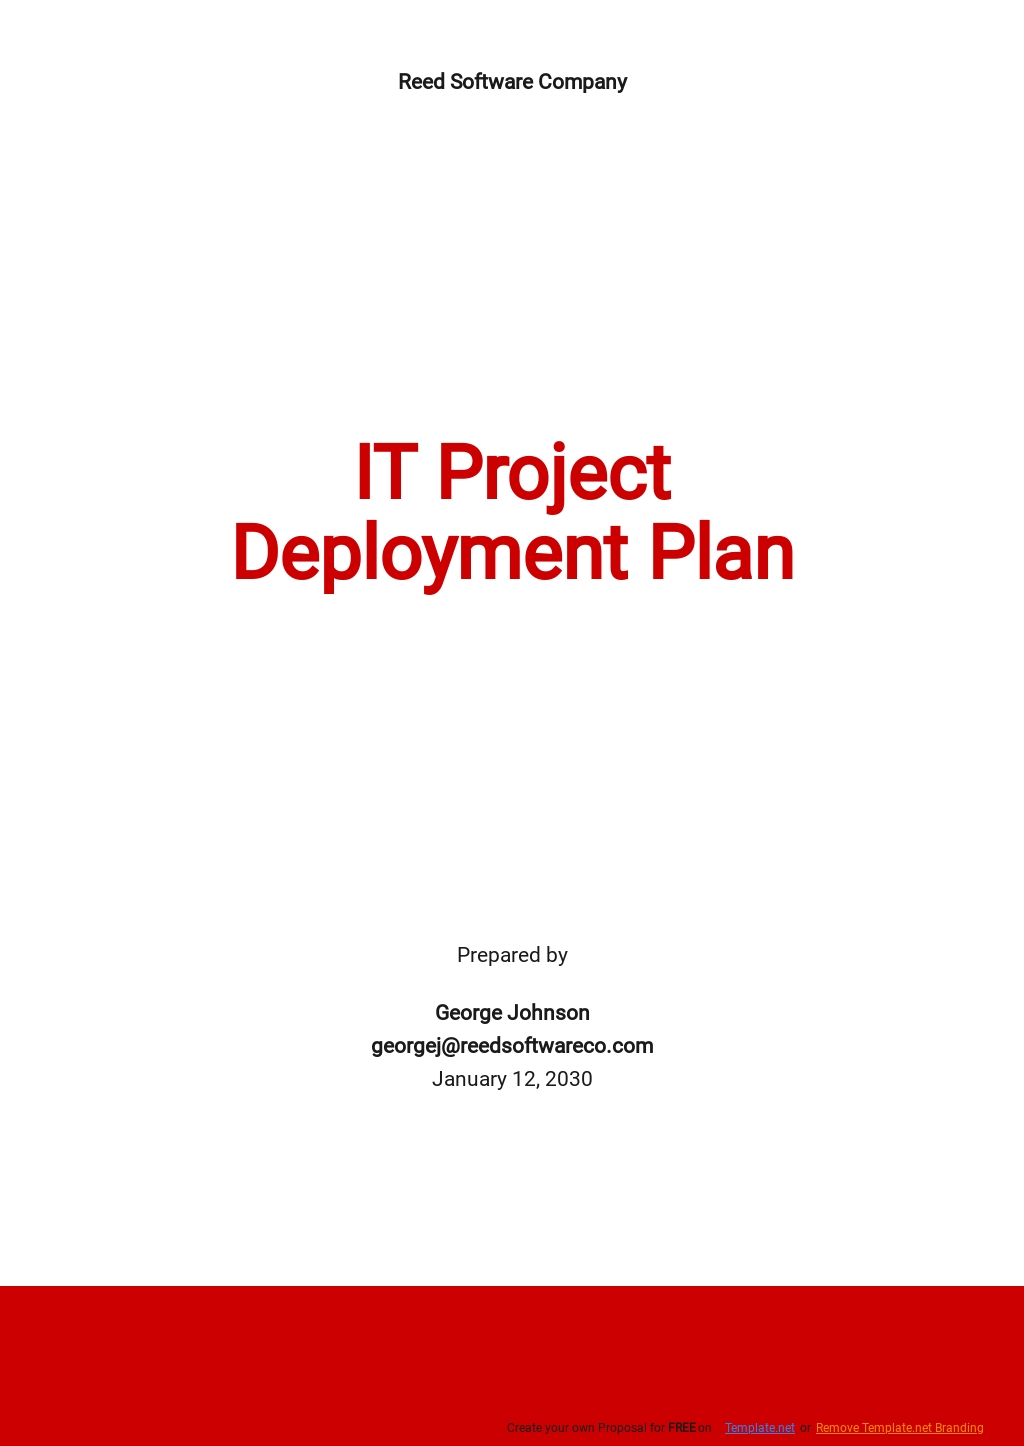 IT Project Deployment Plan Template